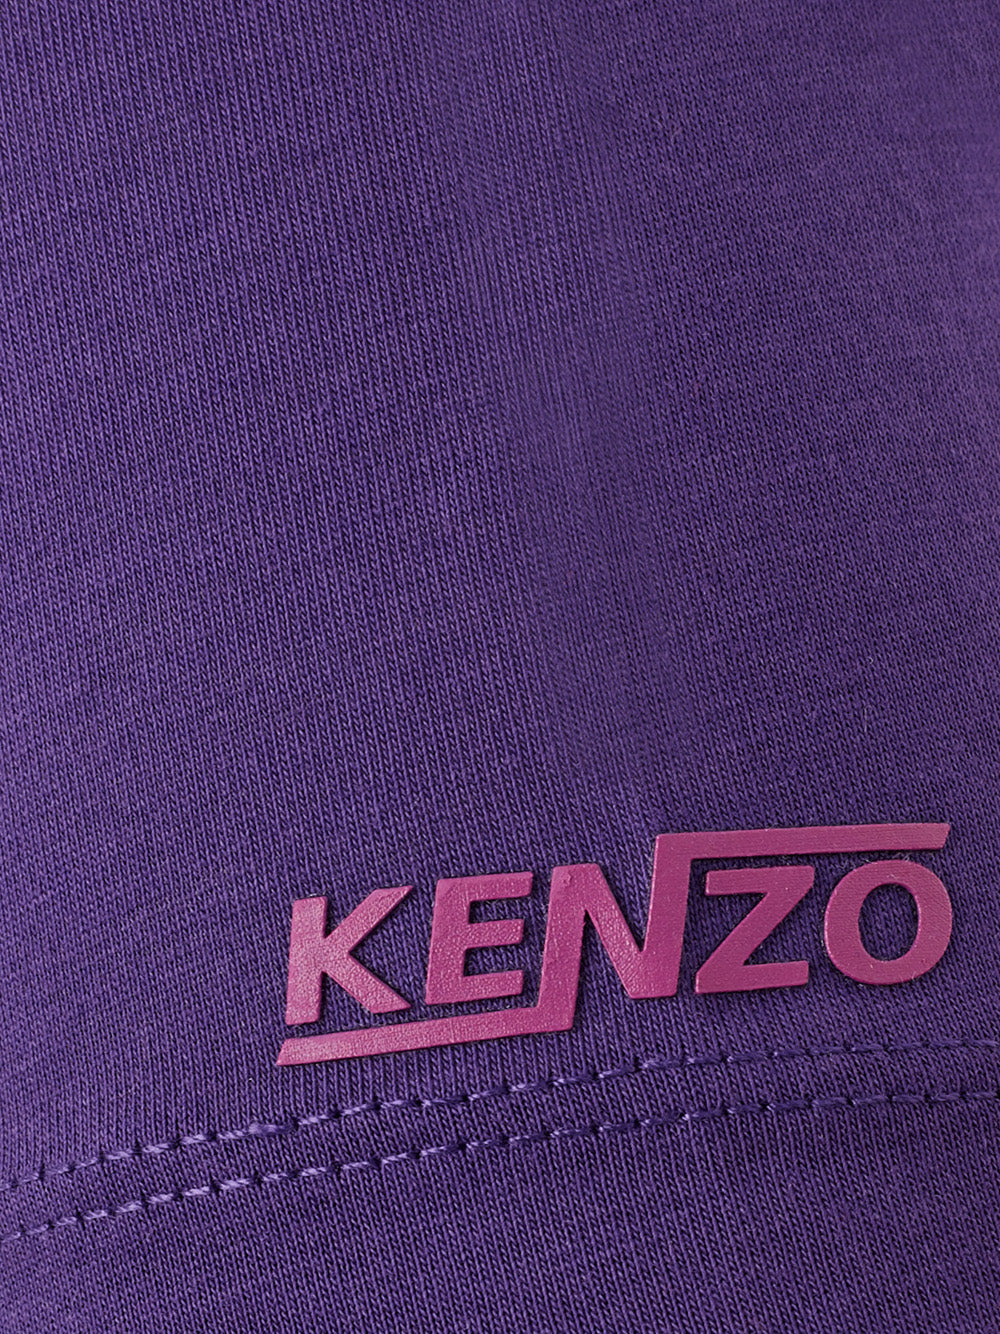 Kenzo T-Shirt with Magic Print